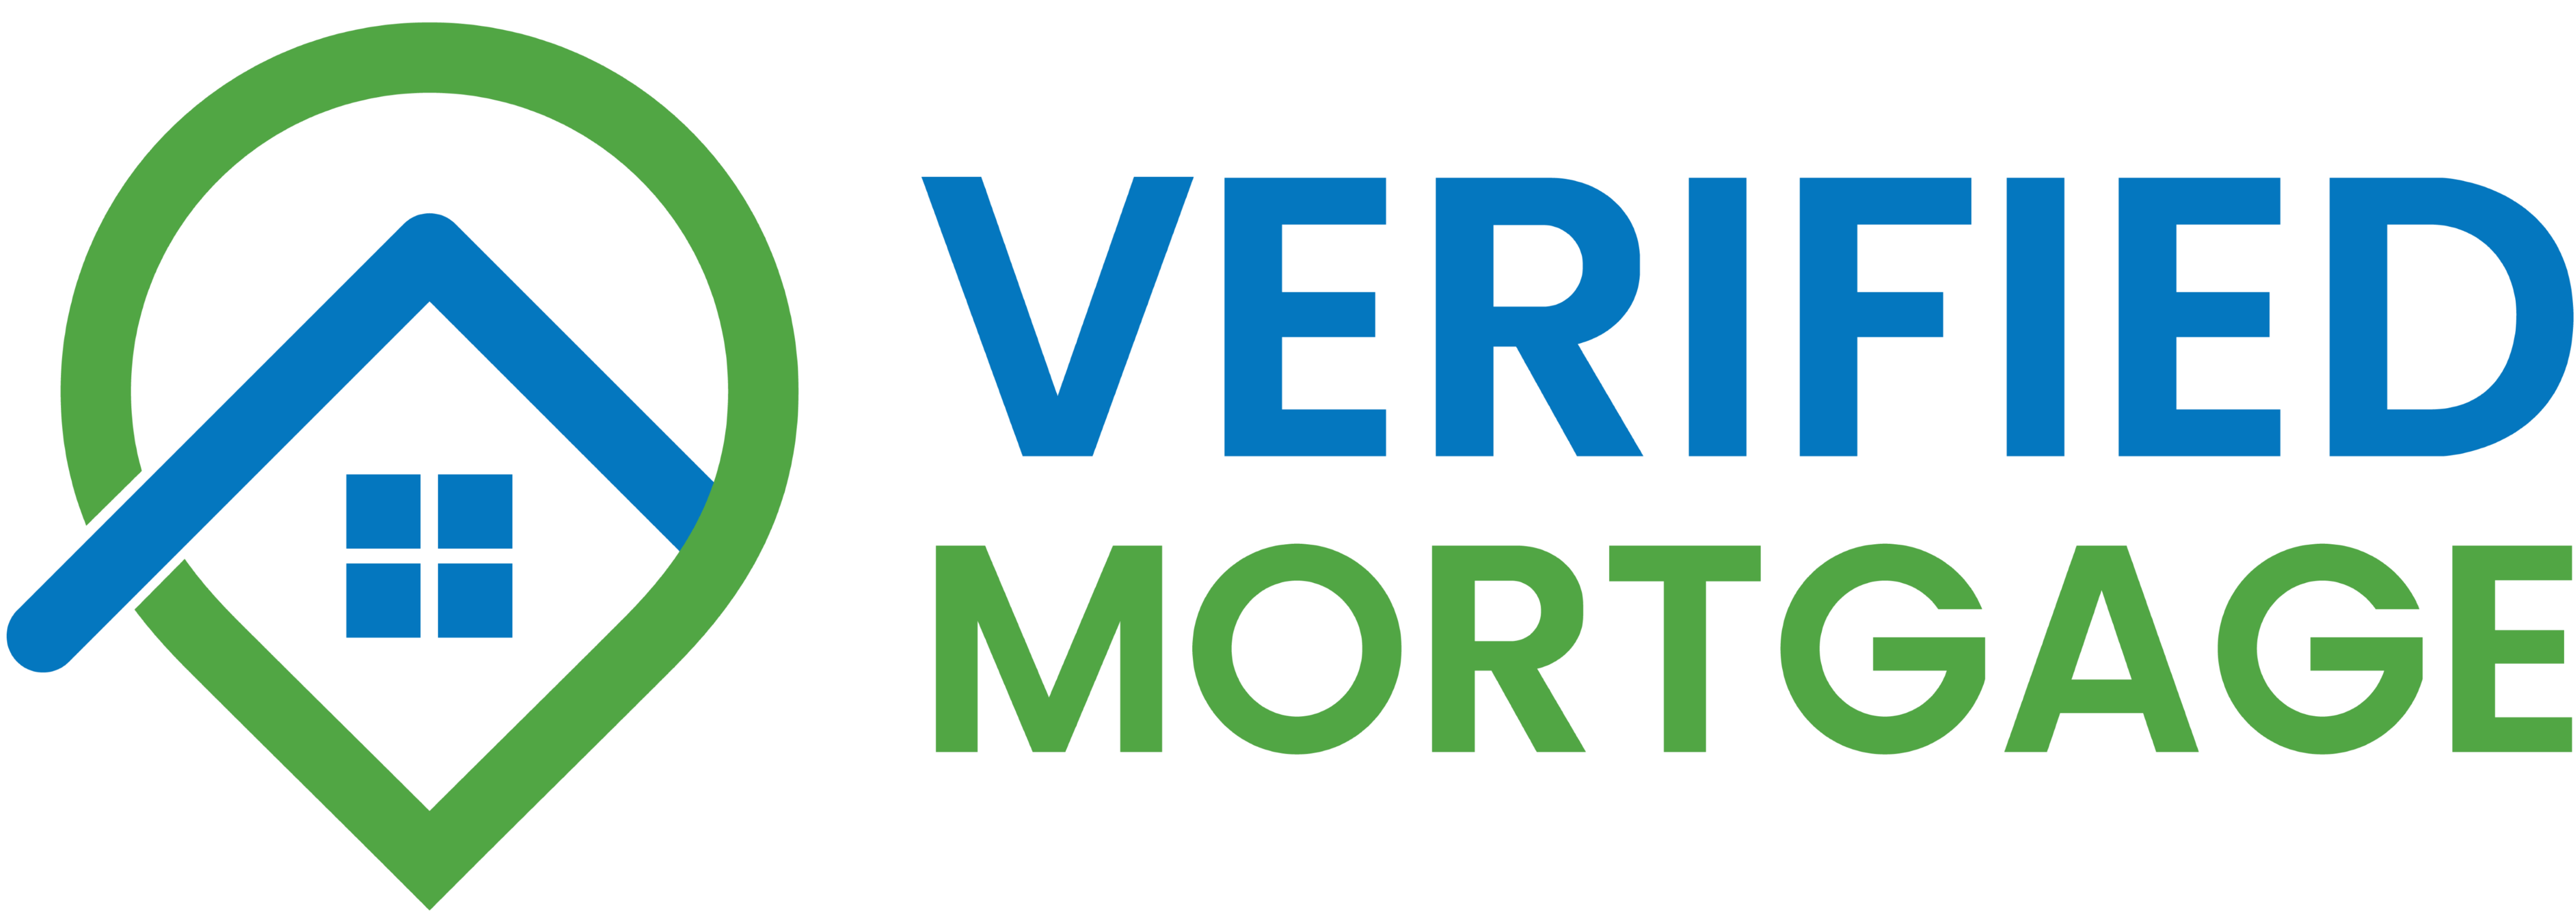 Verified Mortgage LLC logo